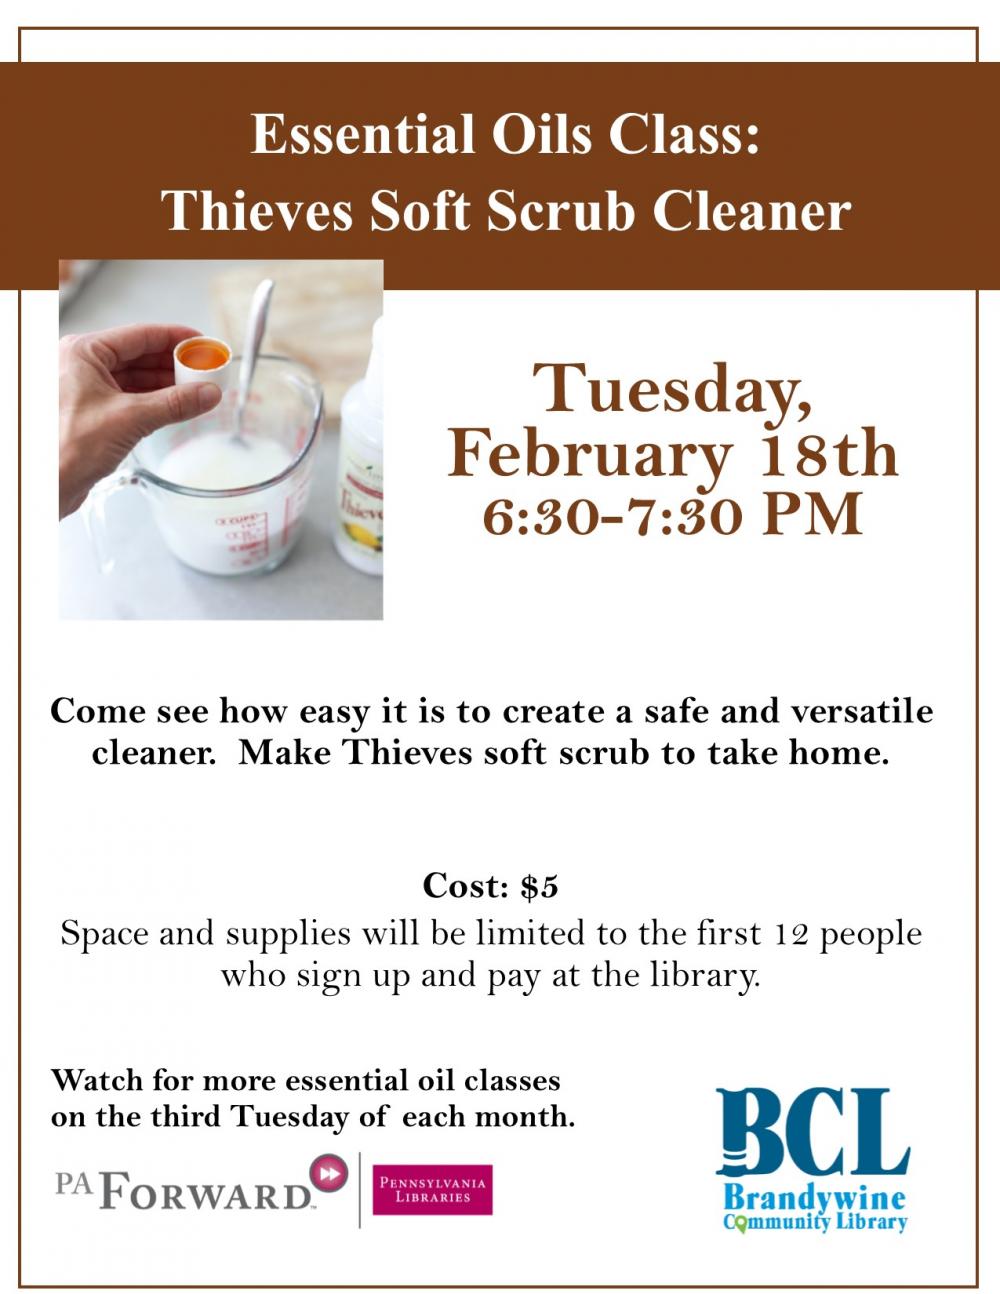 essential oils- February 18 class- Thieves Soft Scrub Cleaner